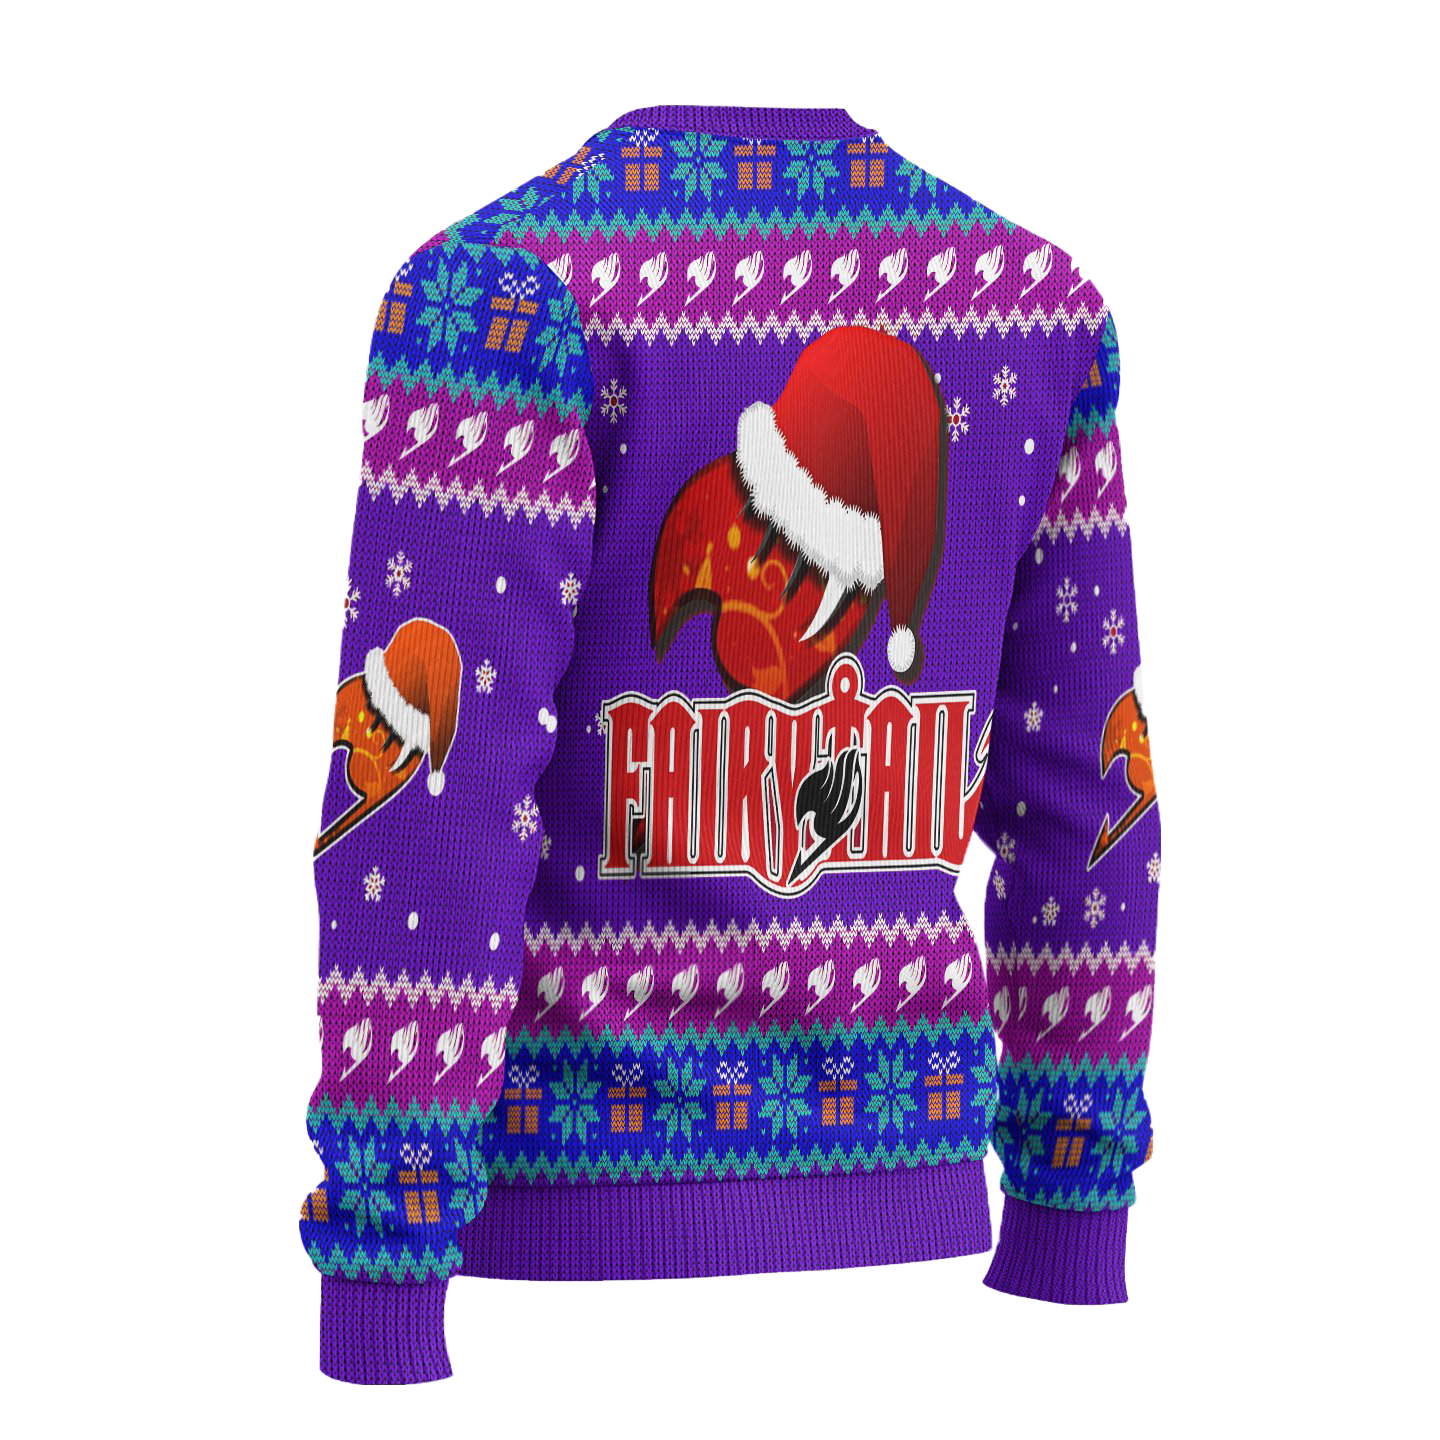 Gray Fullbuster Anime Ugly Christmas Sweater Custom Fairy Tail Xmas Gift